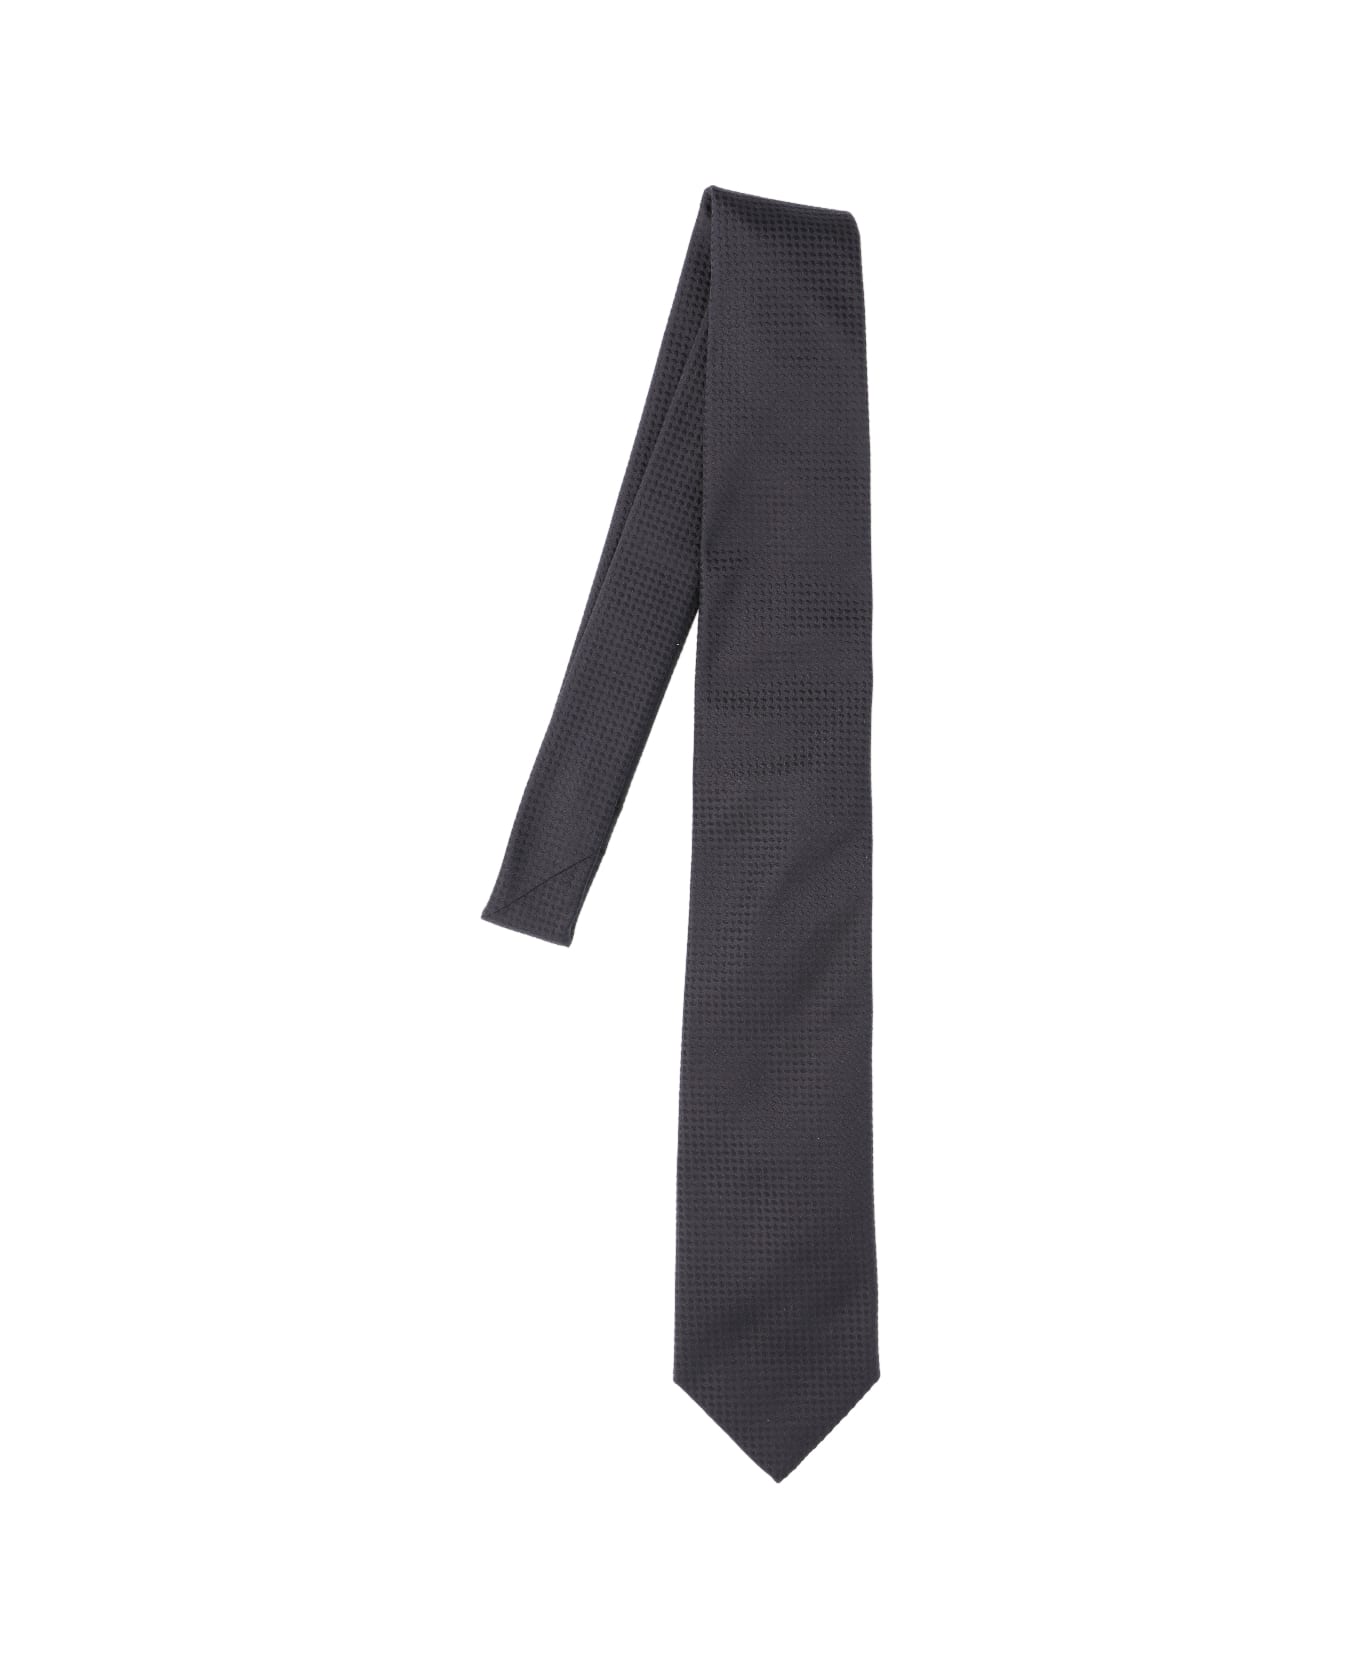 Altea Basic Tie - Black  